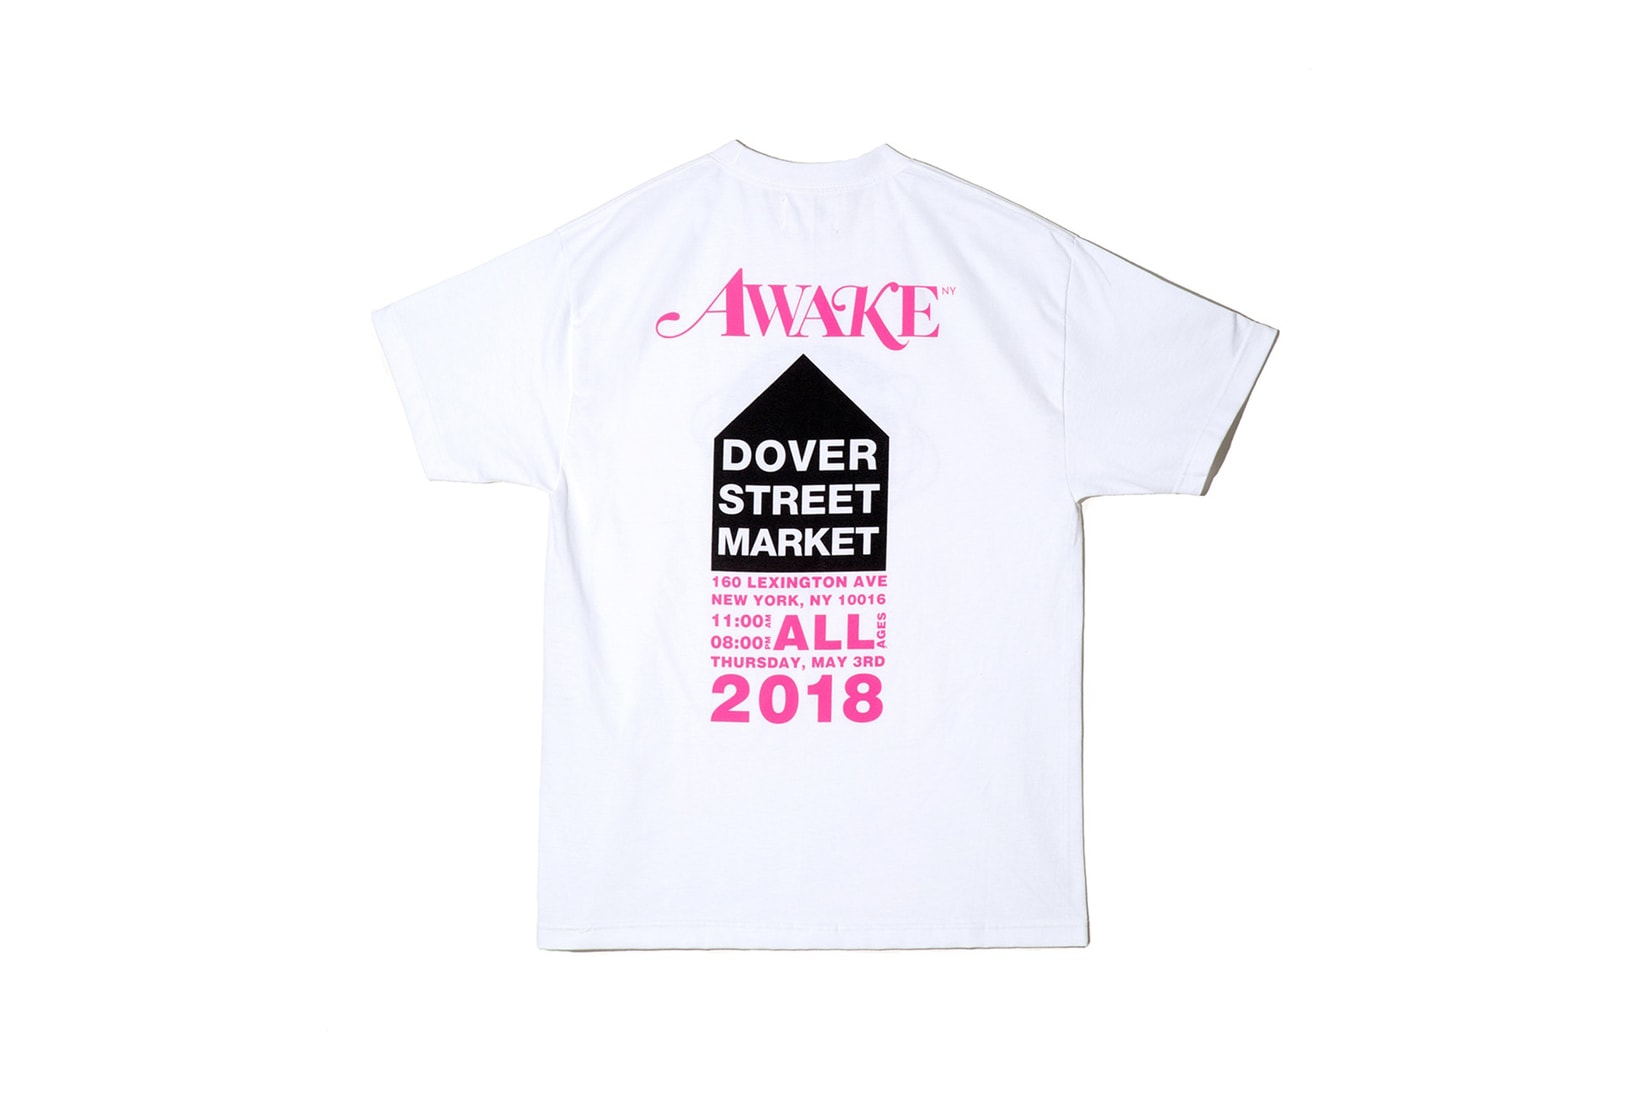 Awake NY x Dover Street Market New York Collaboration T-Shirt White